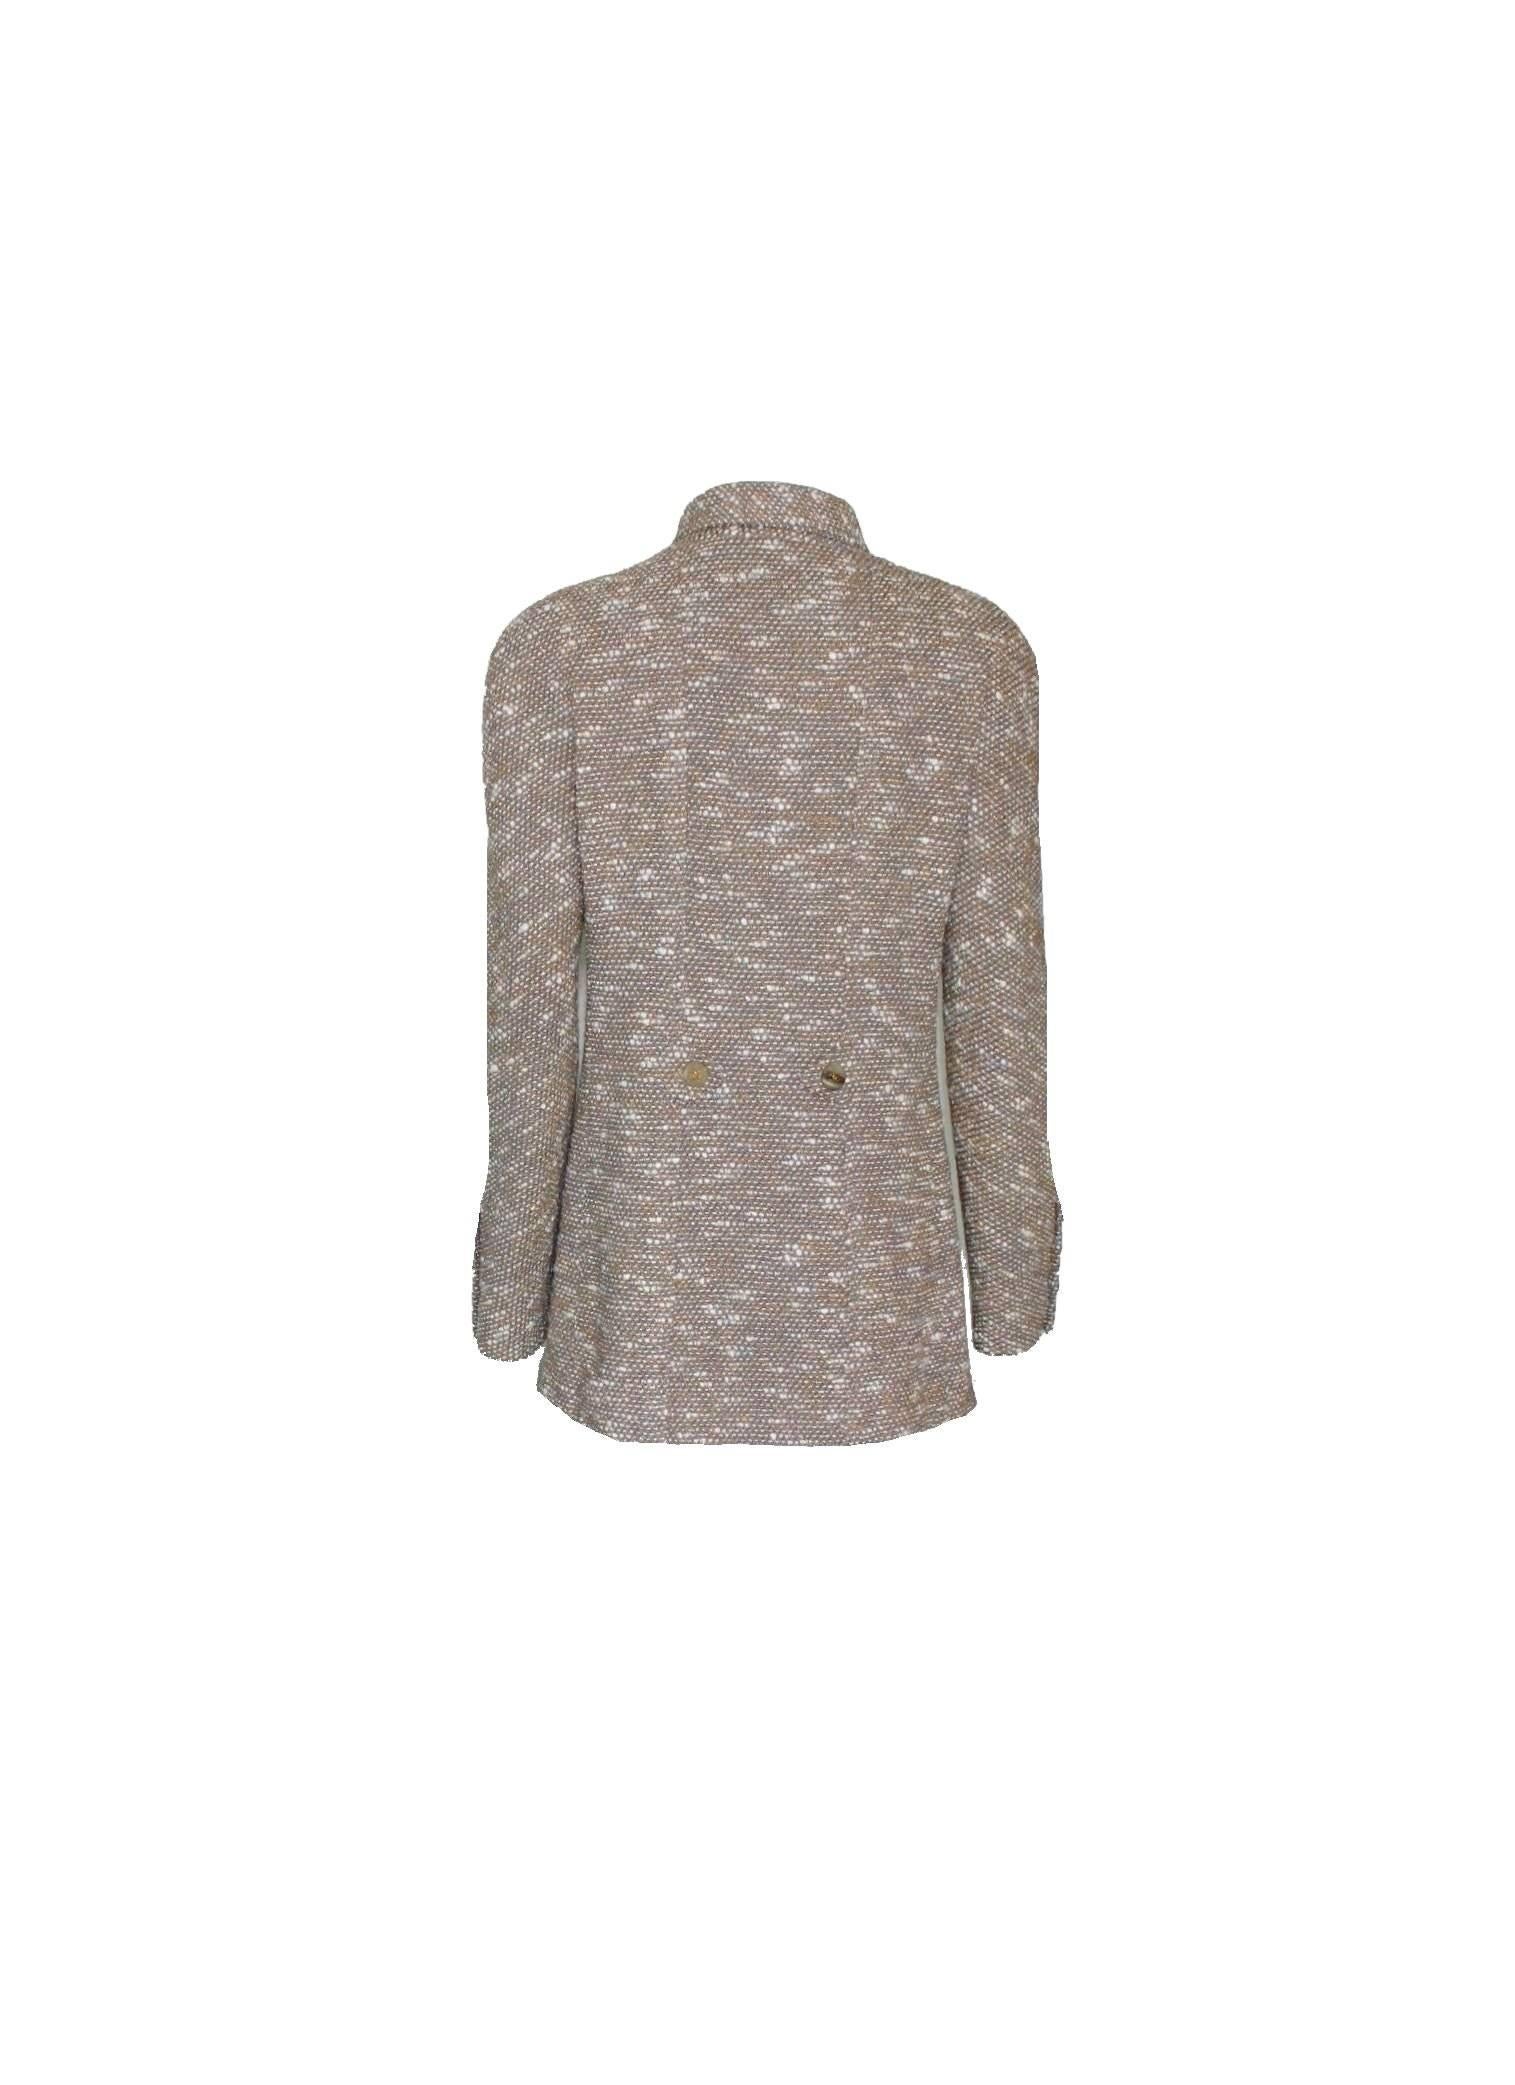 Women's Stunning Chanel Tweed CC Logo Button Short Coat Jacket Blazer